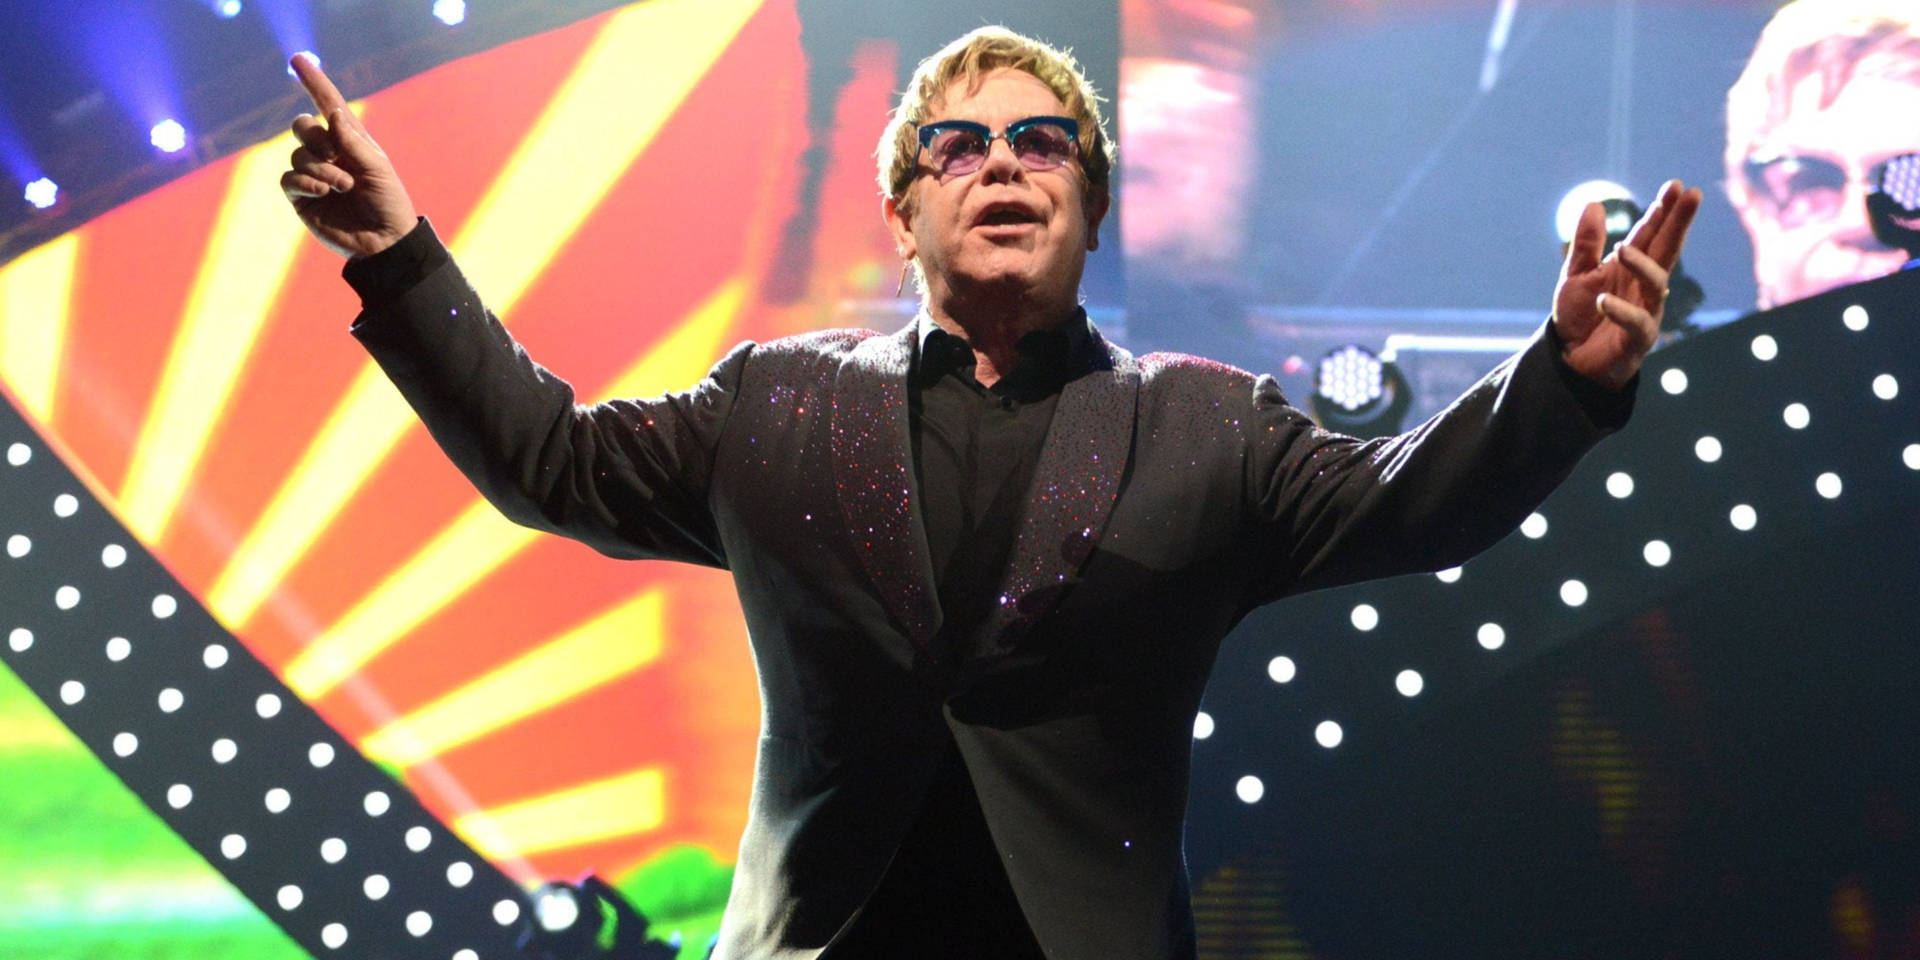 Elton John Soft Rock Concert